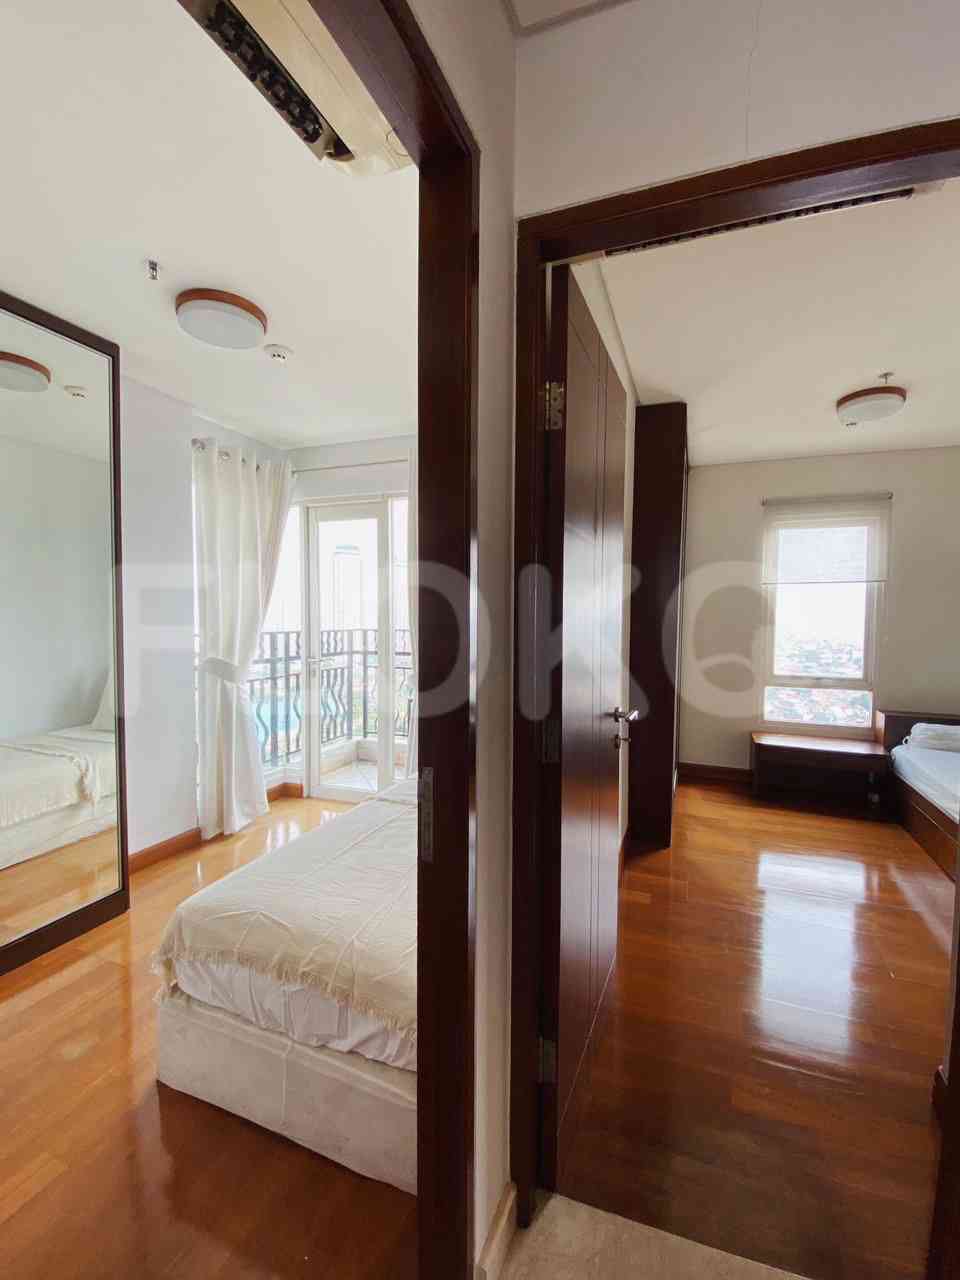 4 Bedroom on 26th Floor for Rent in Permata Hijau Suites Apartment - fpeb05 7